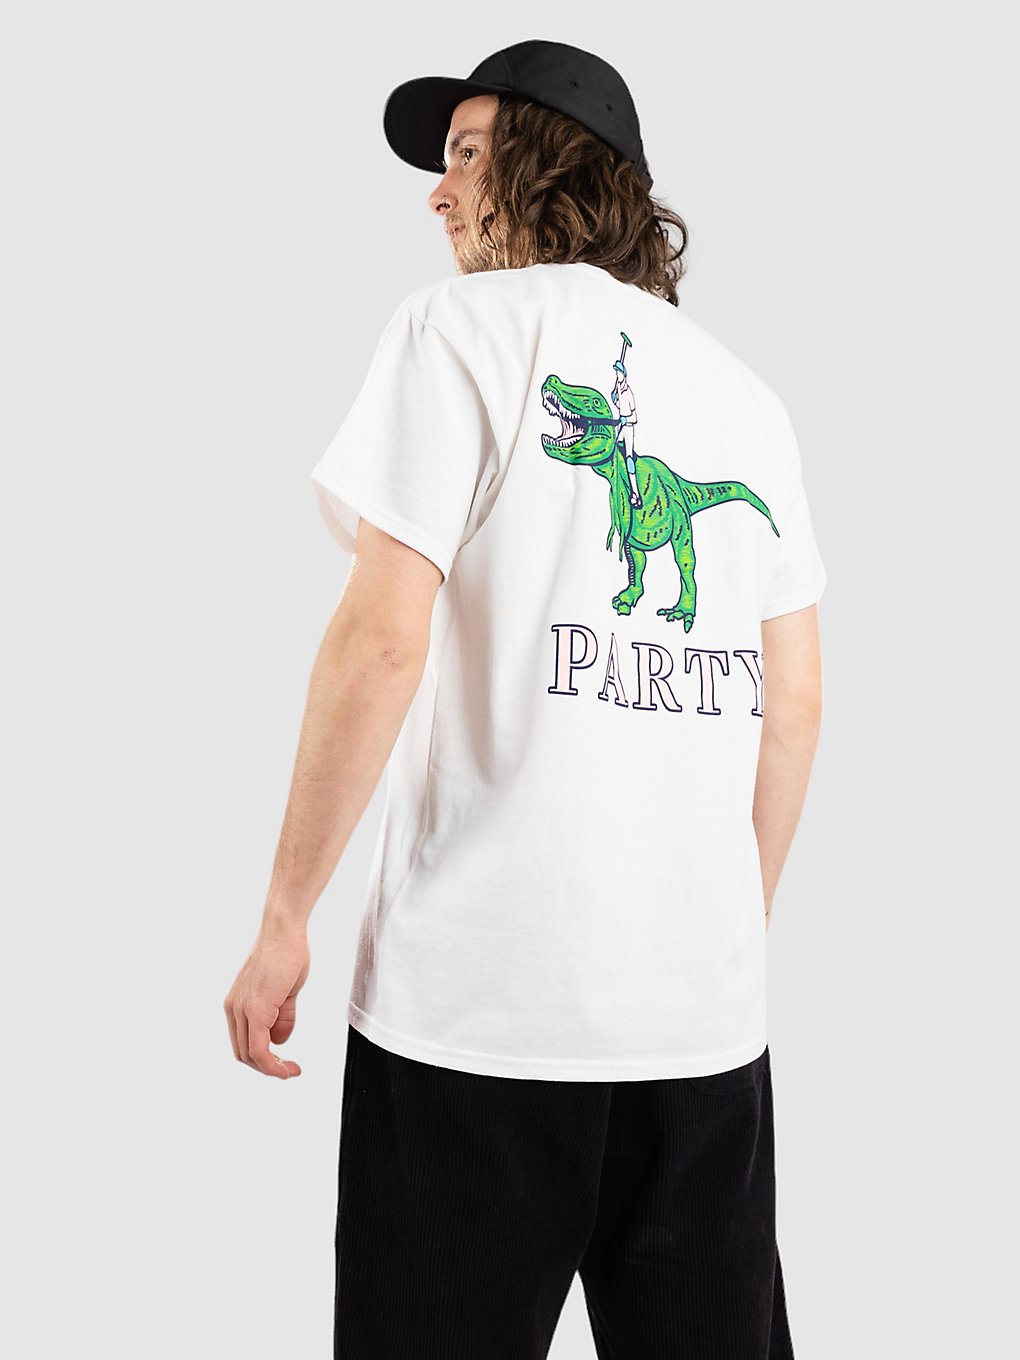 Party Pants Polo Rex T-Shirt white kaufen